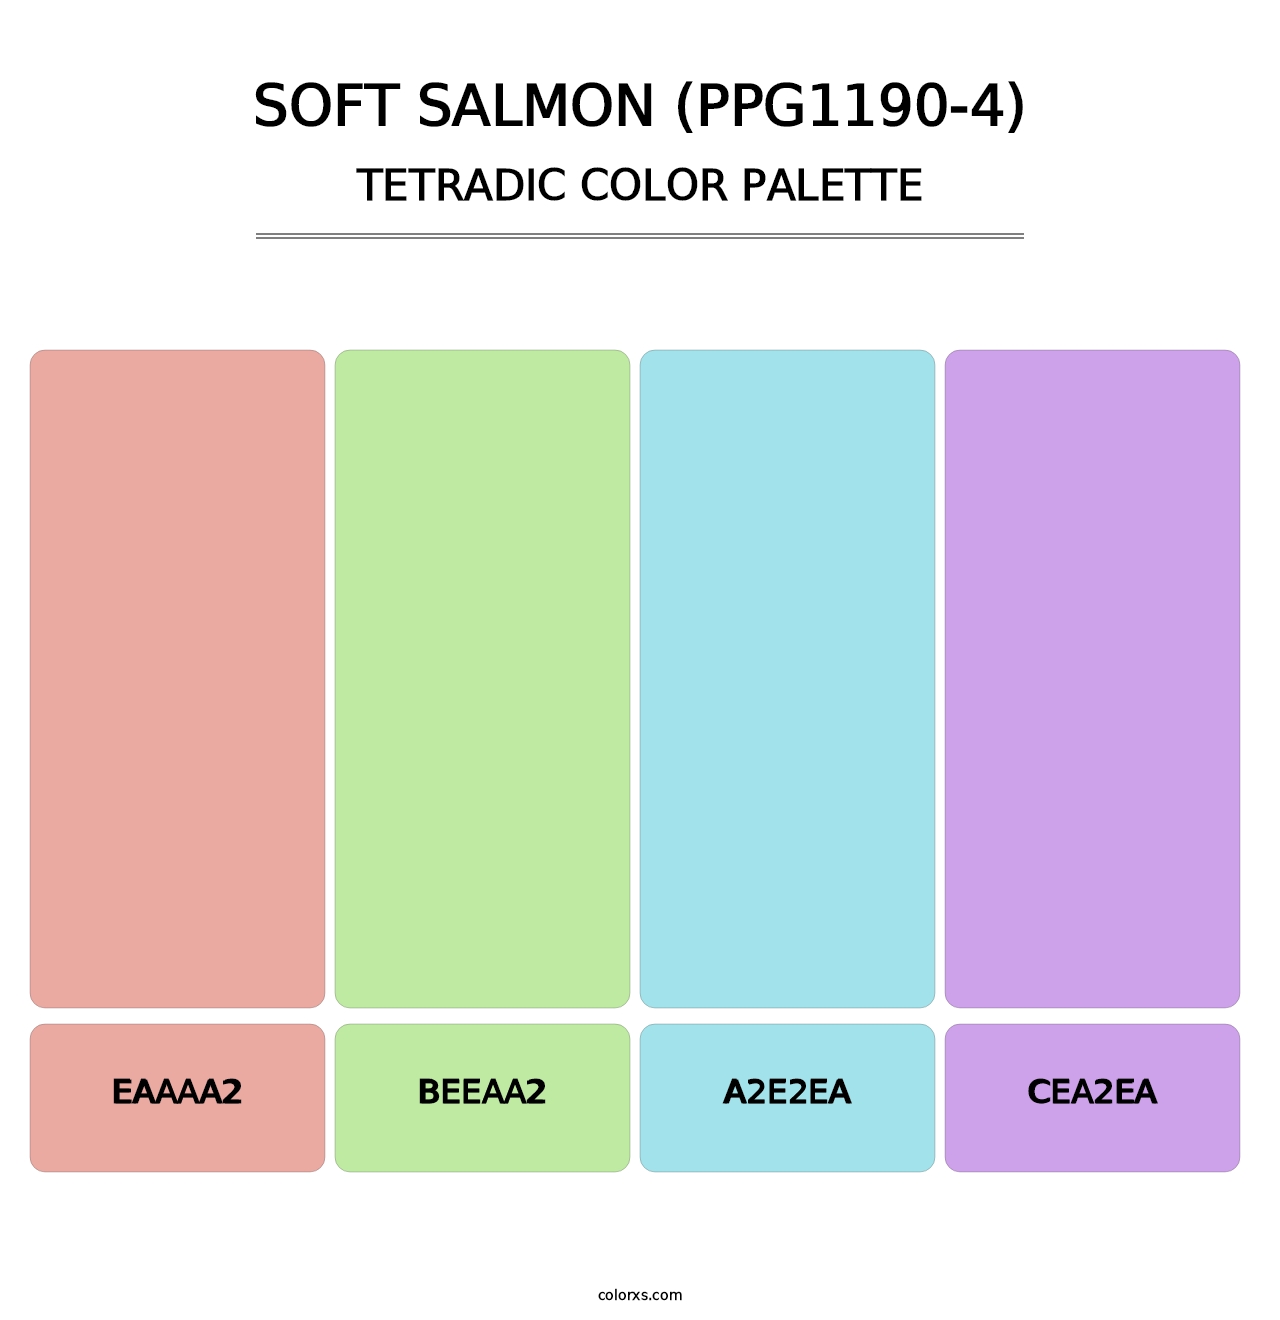 Soft Salmon (PPG1190-4) - Tetradic Color Palette